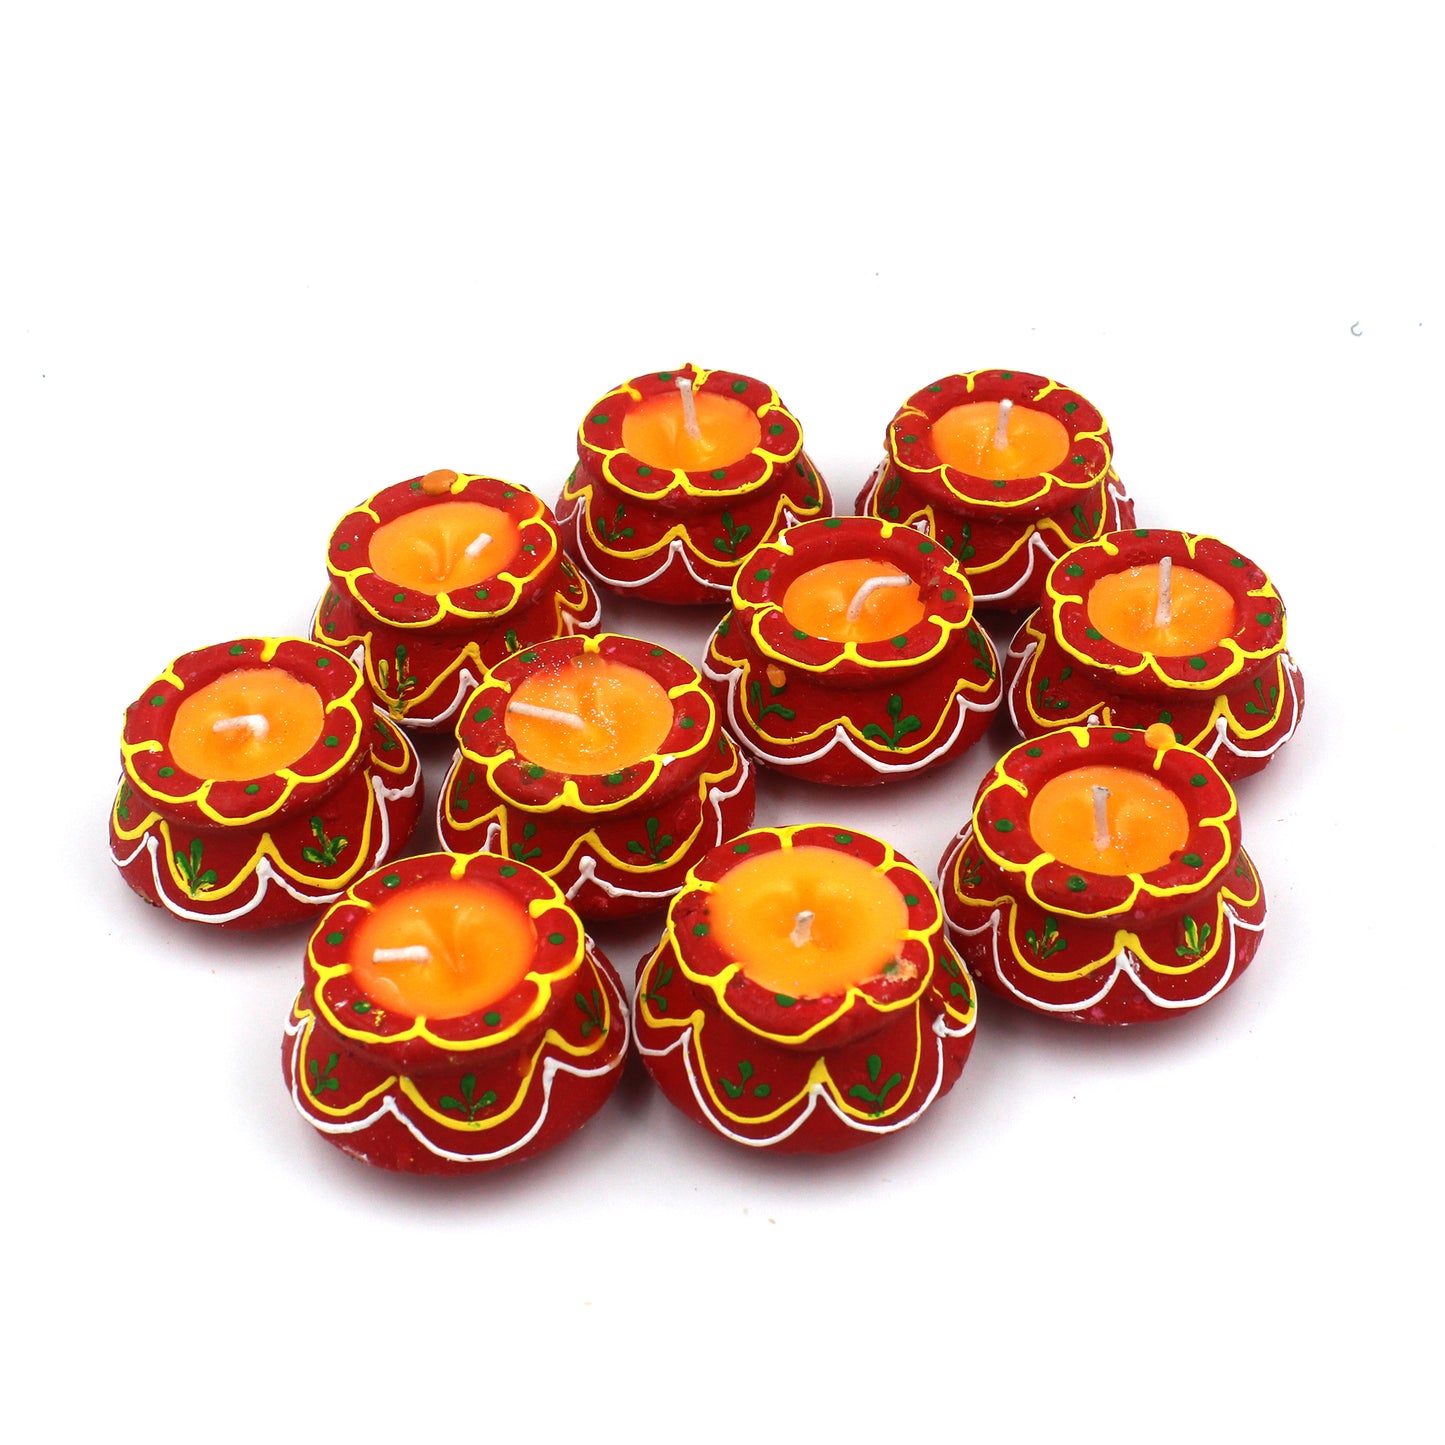 10 Pc Set Matki Clay Diya Wax Filled Diyas for Diwali Home Decoration - Handmade Clay/Mitti Multicolor Diyas Diwali Decoration